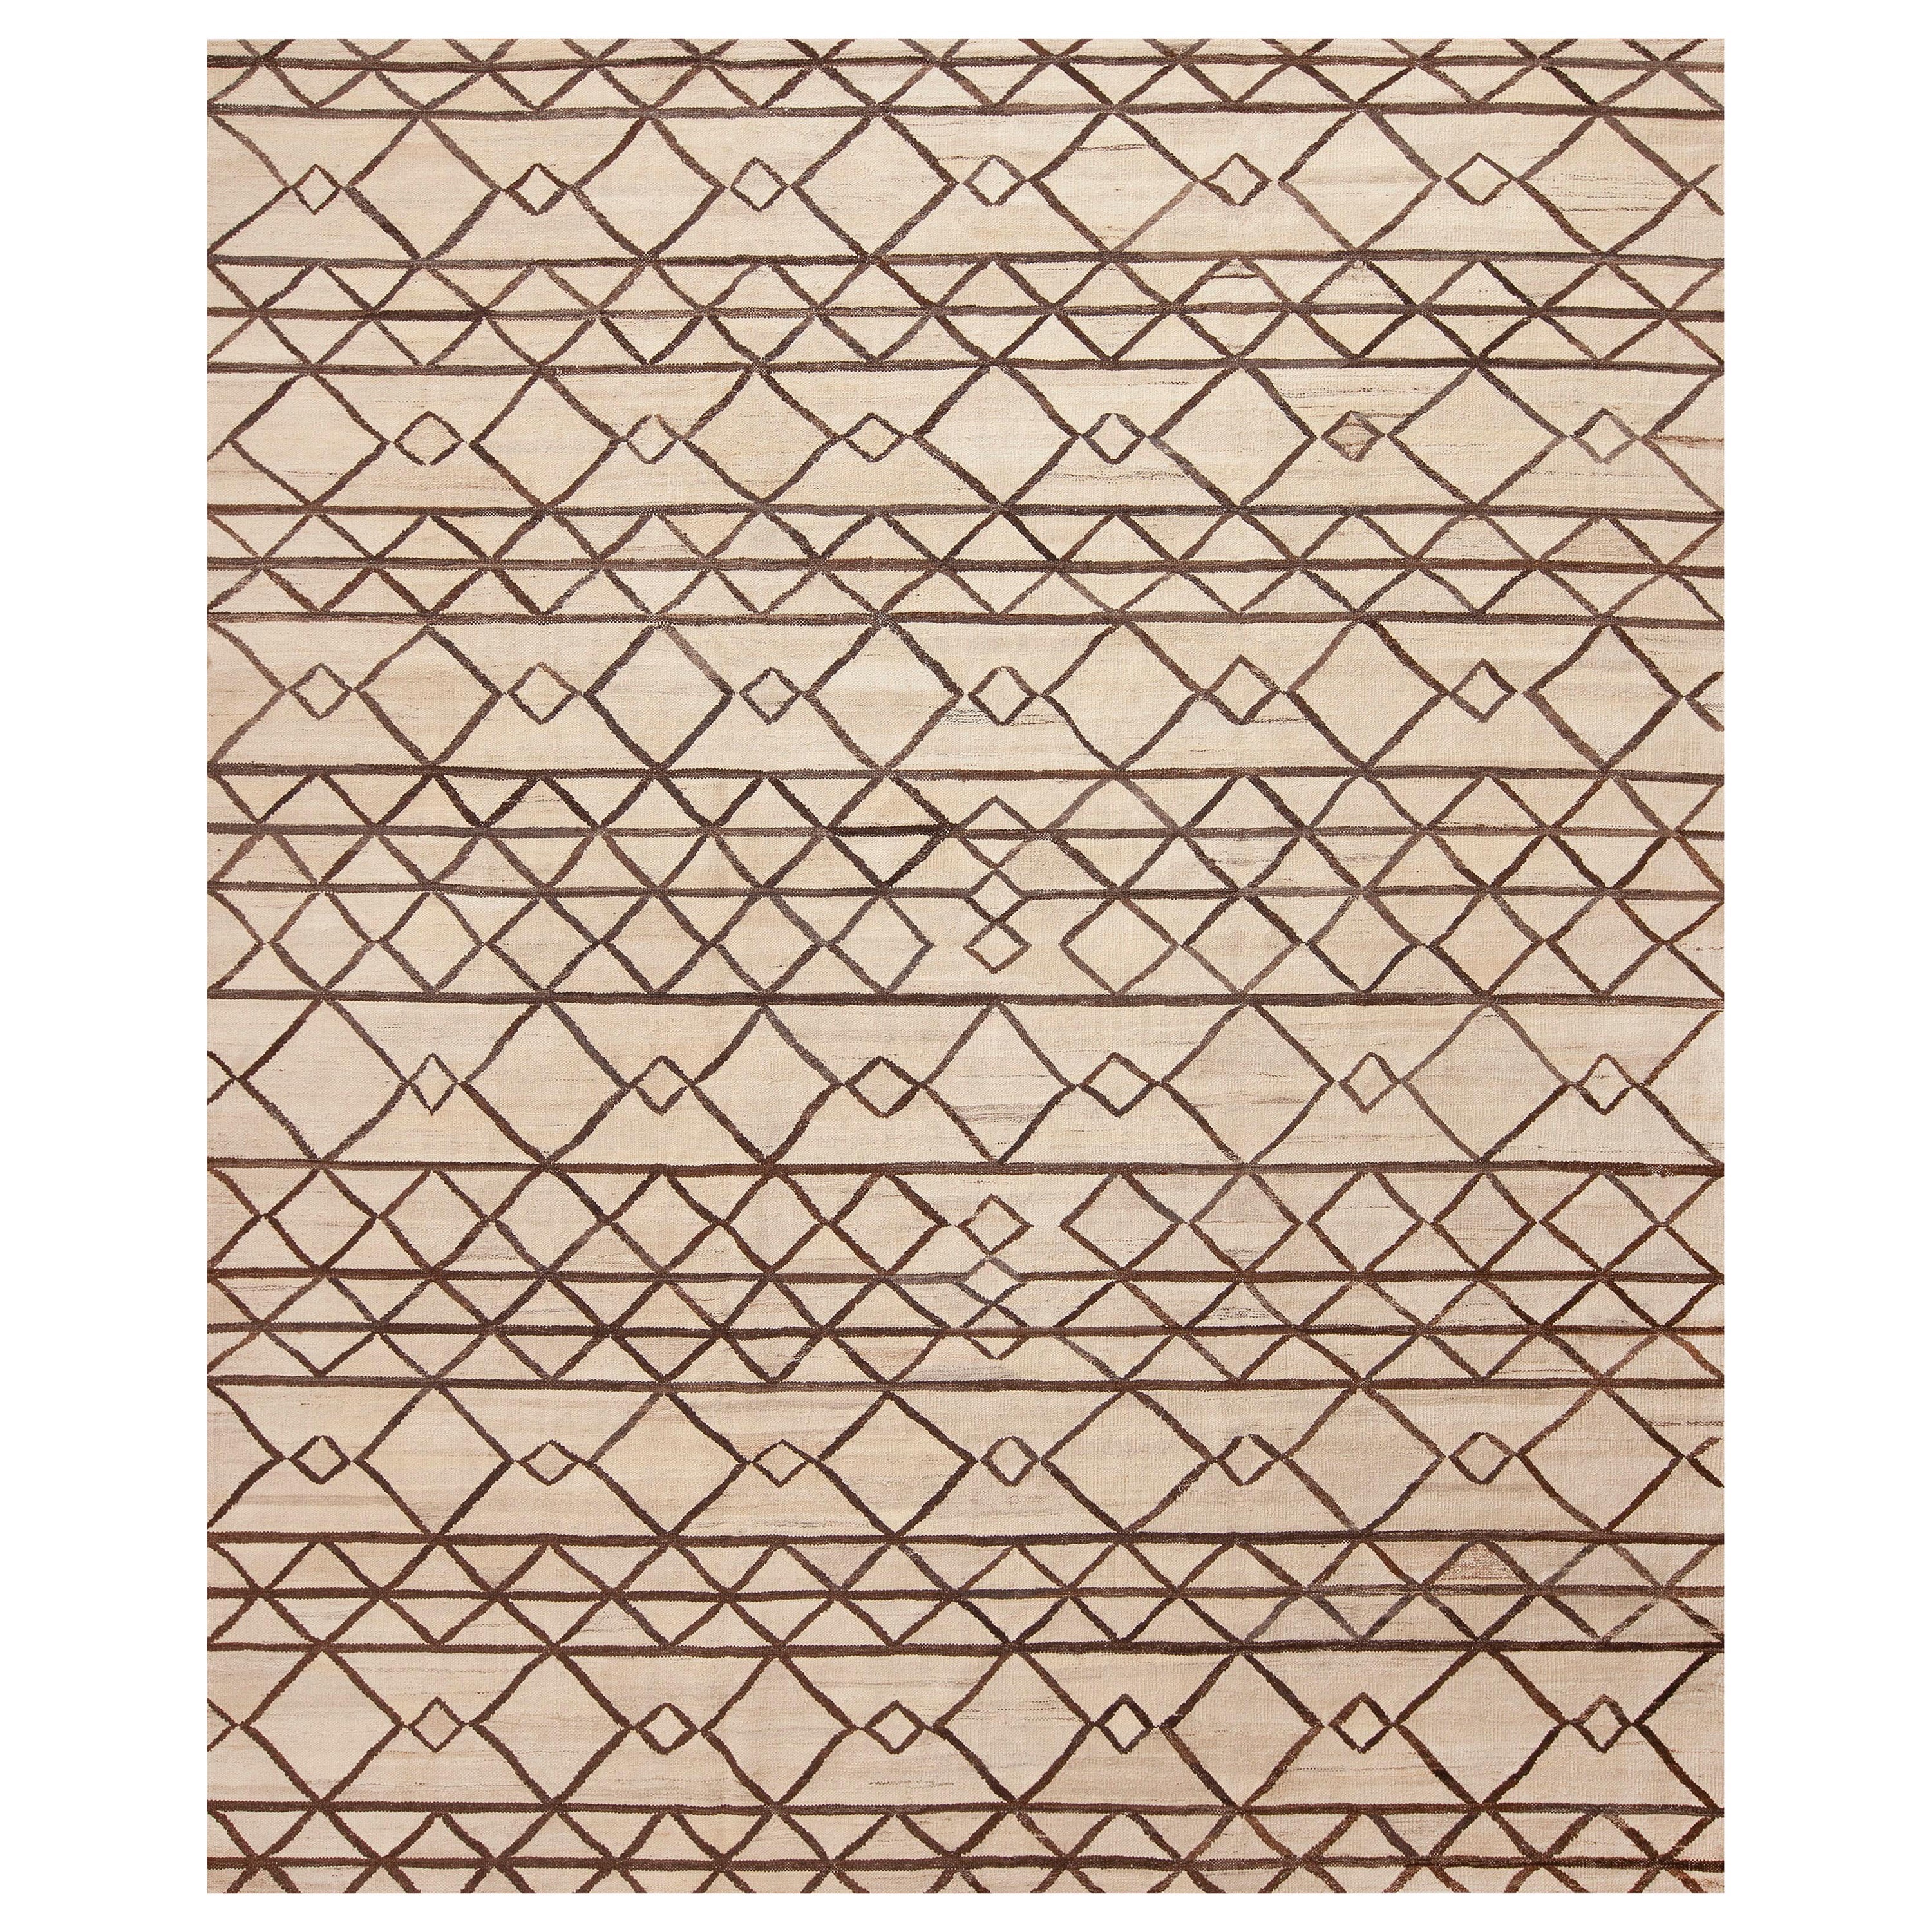 Nazmiyal Collection White And Brown Geometric Modern Area Kilim Rug 9'7" x 11'9 For Sale